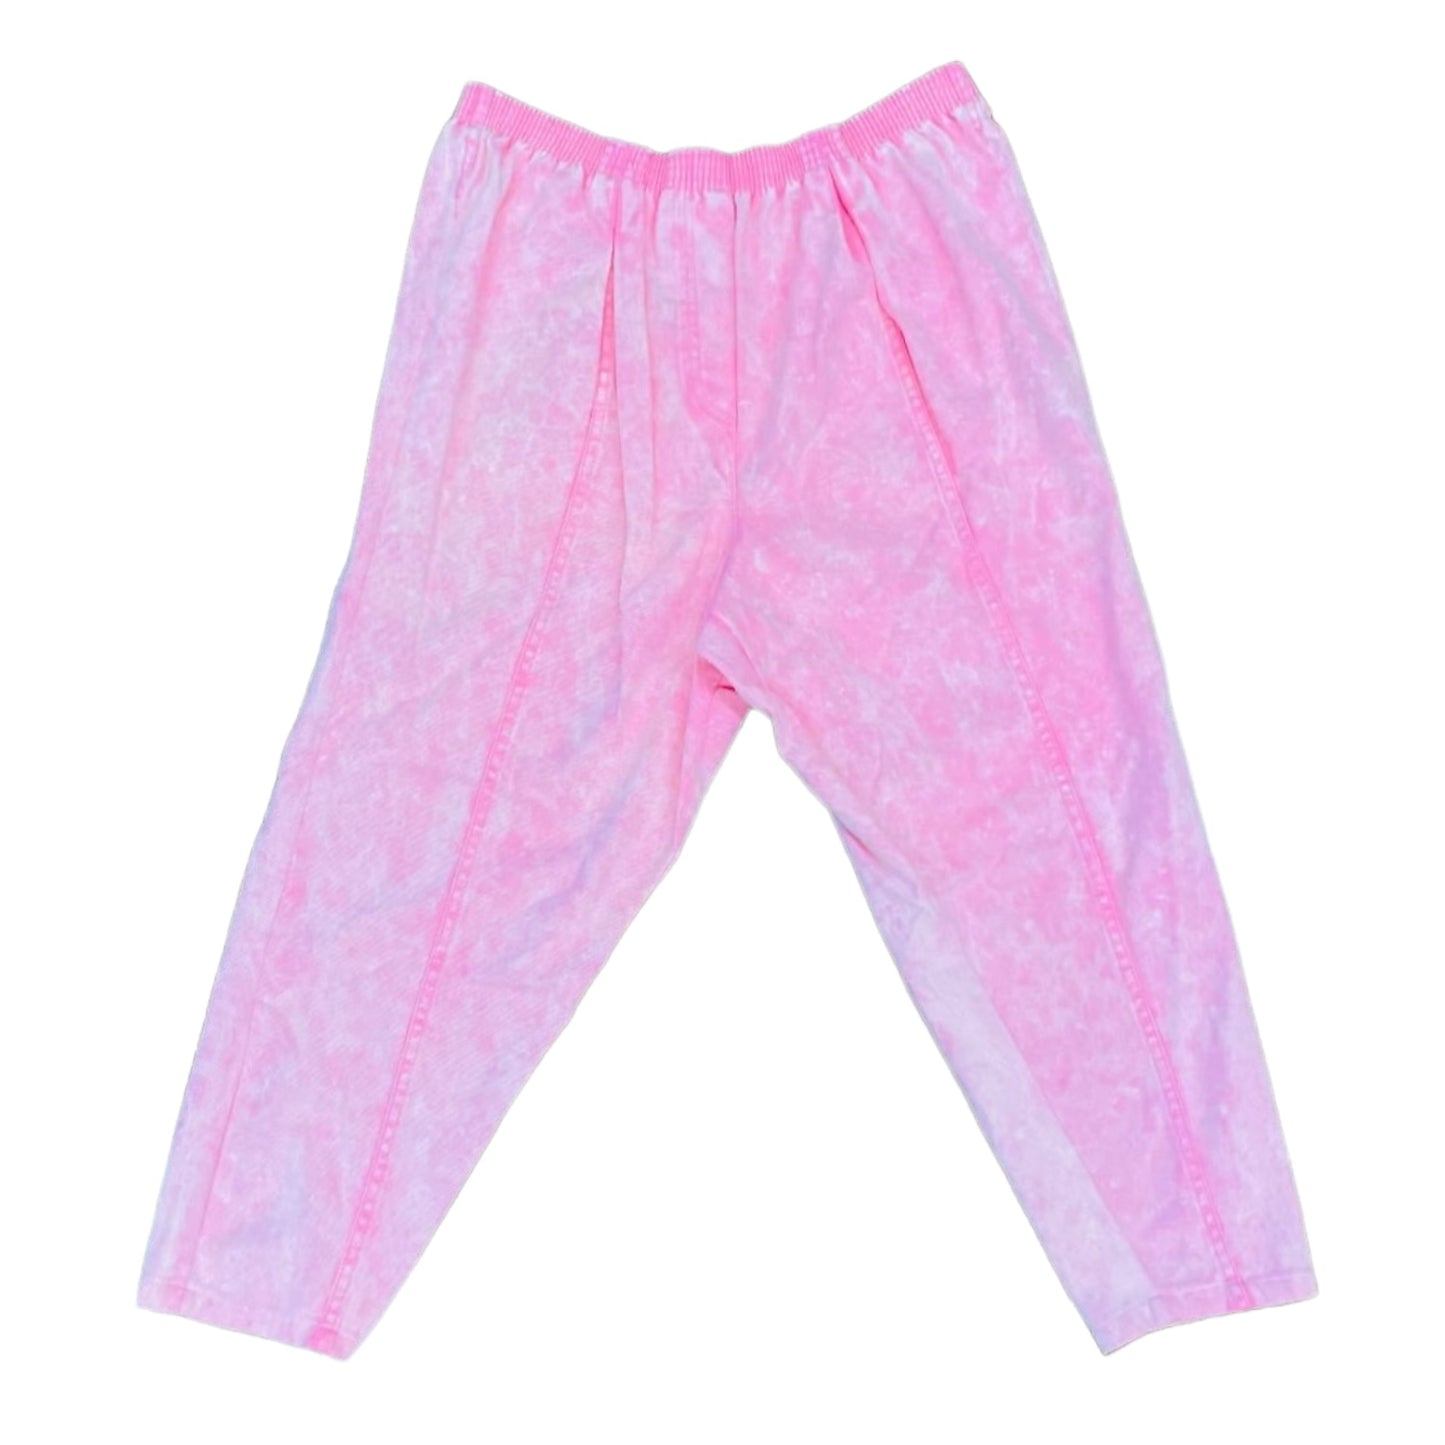 Vintage 1990s Neon Pink Stone Washed Bubble Jeans - Size L/XL